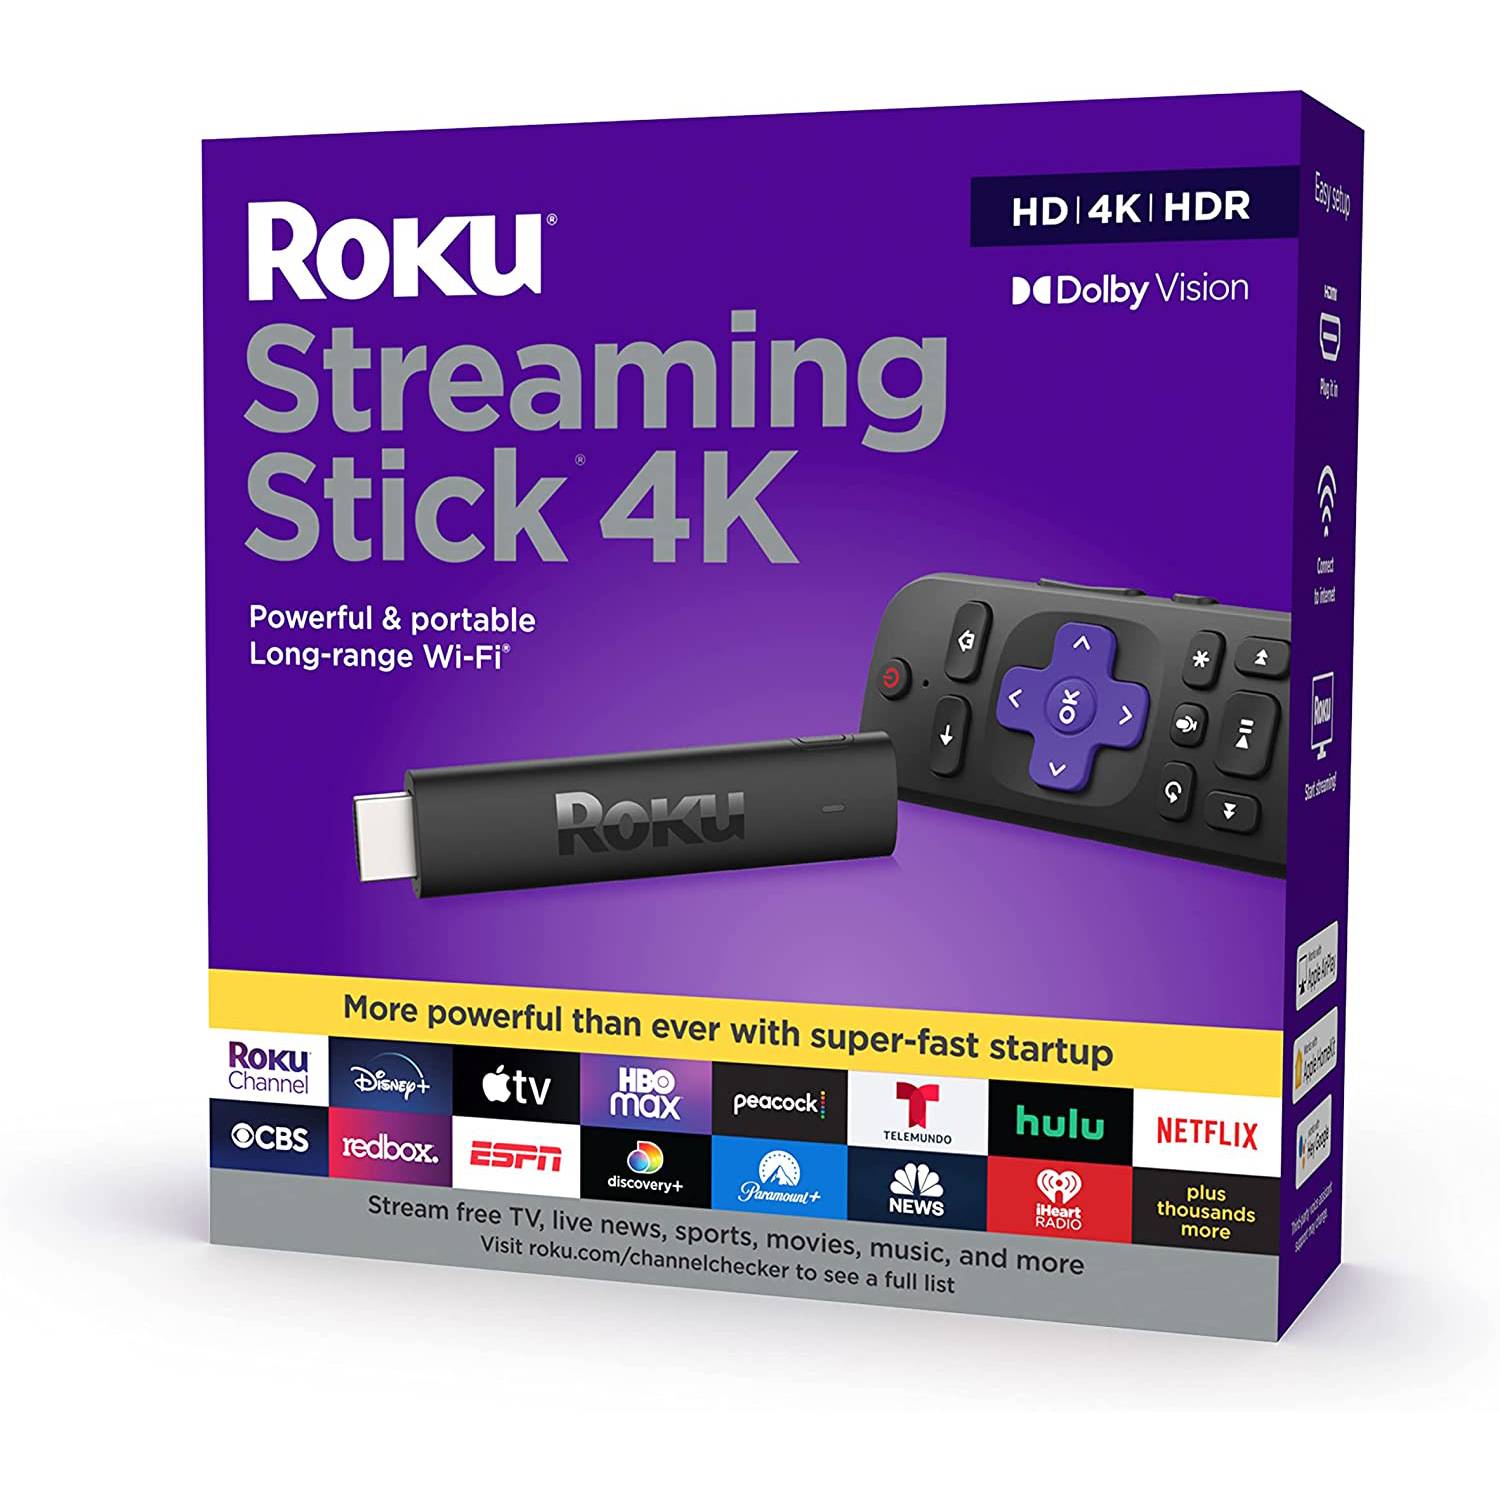 Reproductor multimedia   Fire TV Stick 4K 2021, Mando voz Alexa, UHD  4K, HDMI, Negro